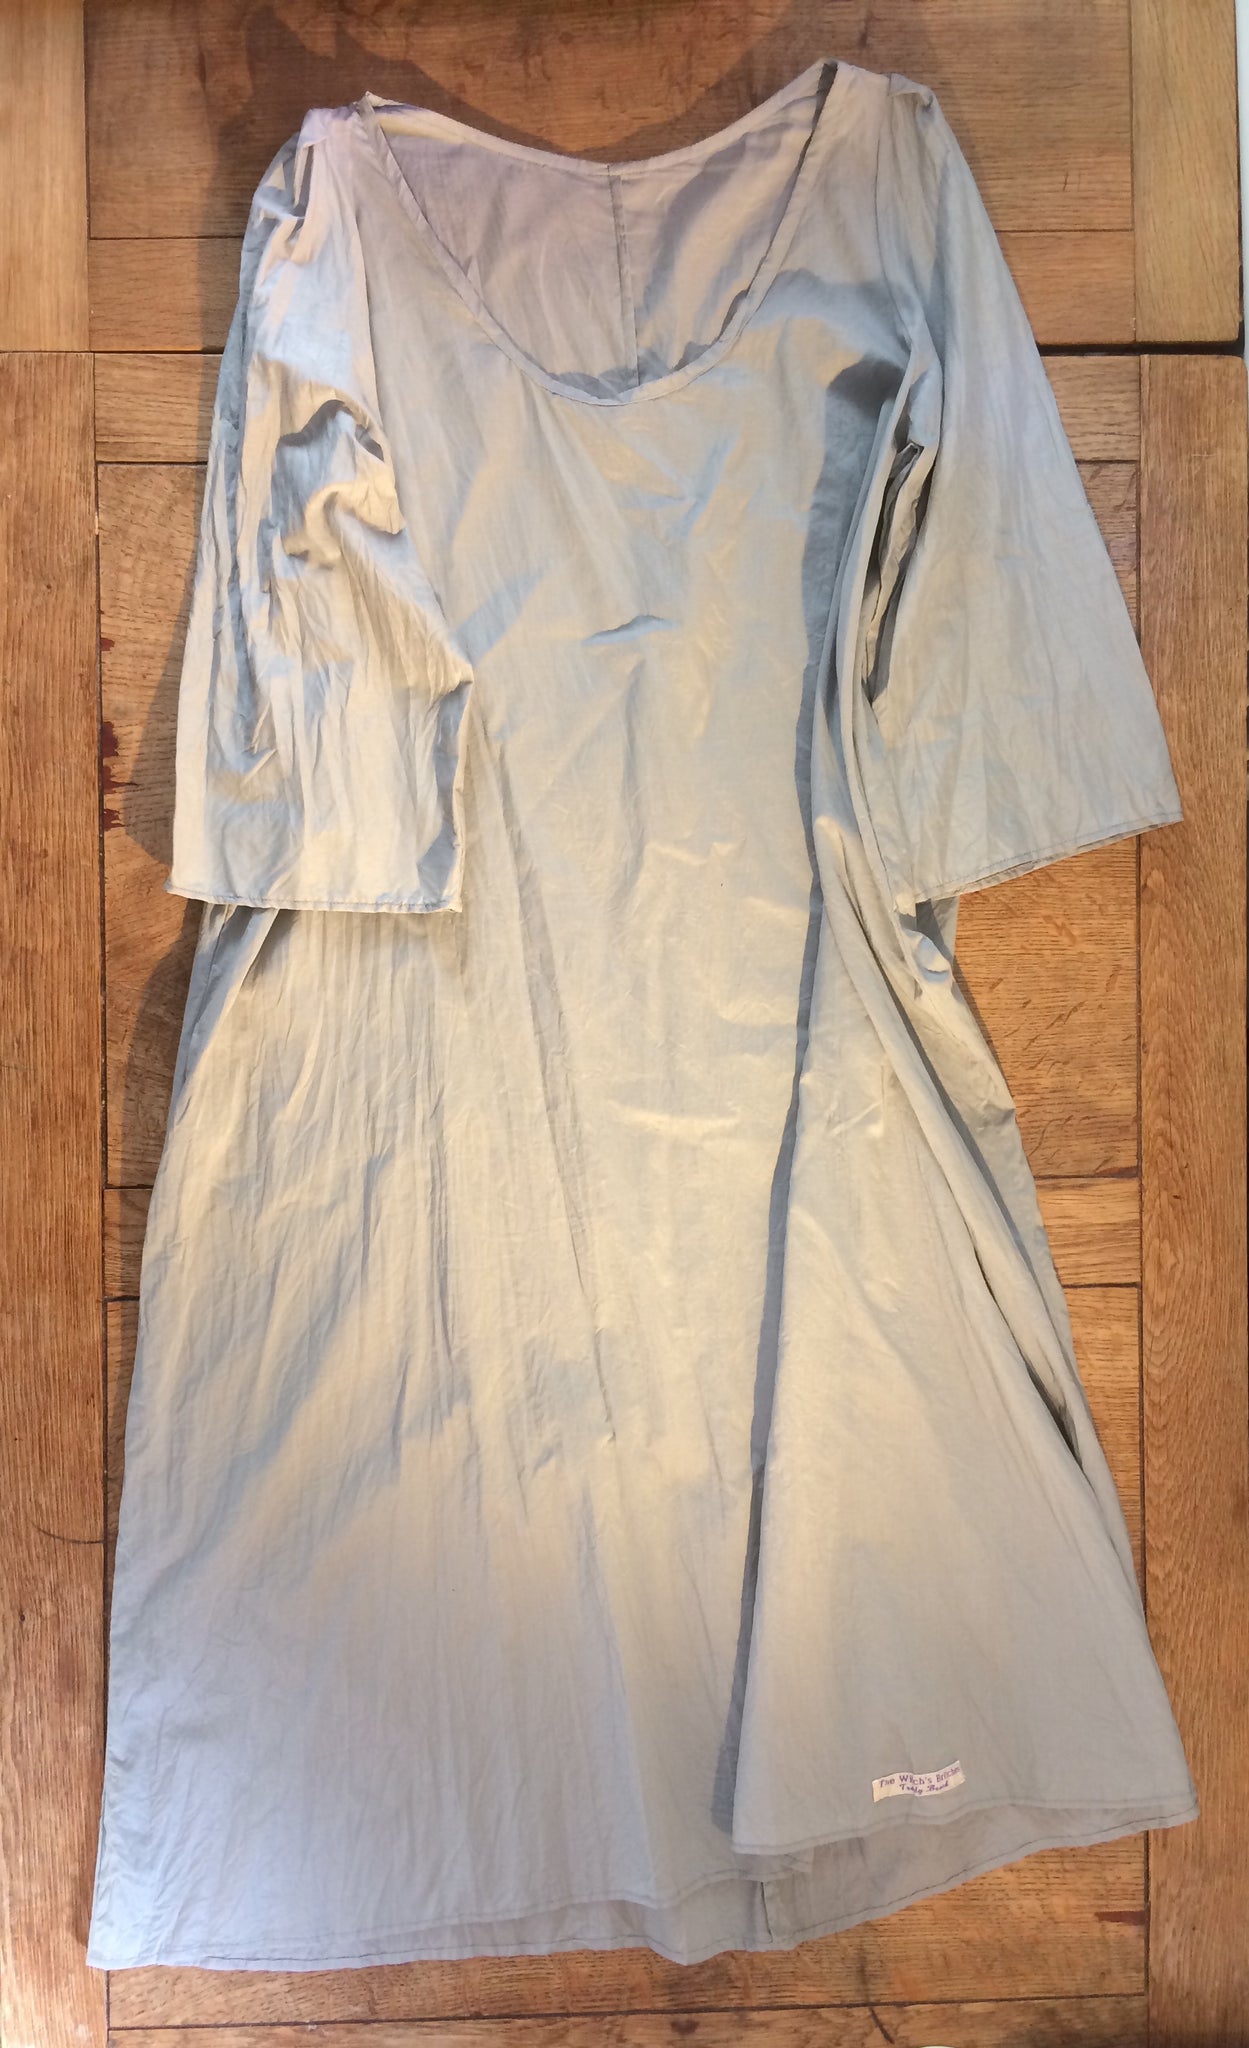 Organic light grey cotton voile chemise dress (44" bust)